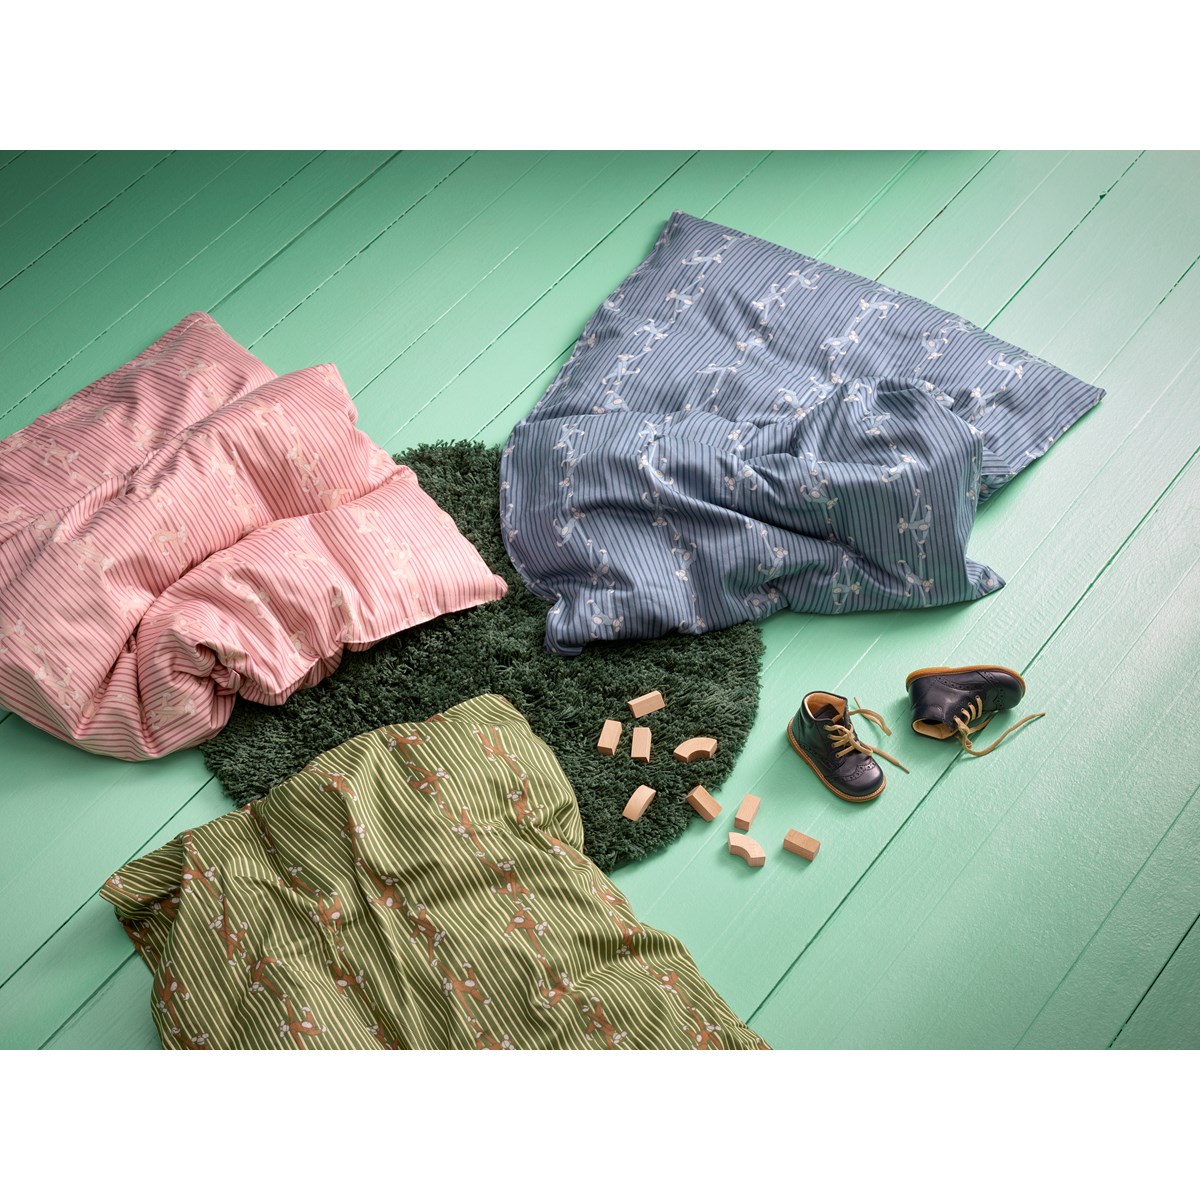 Kay Bojesen Apekatt Junior sengetøy 100x140 cm rosa